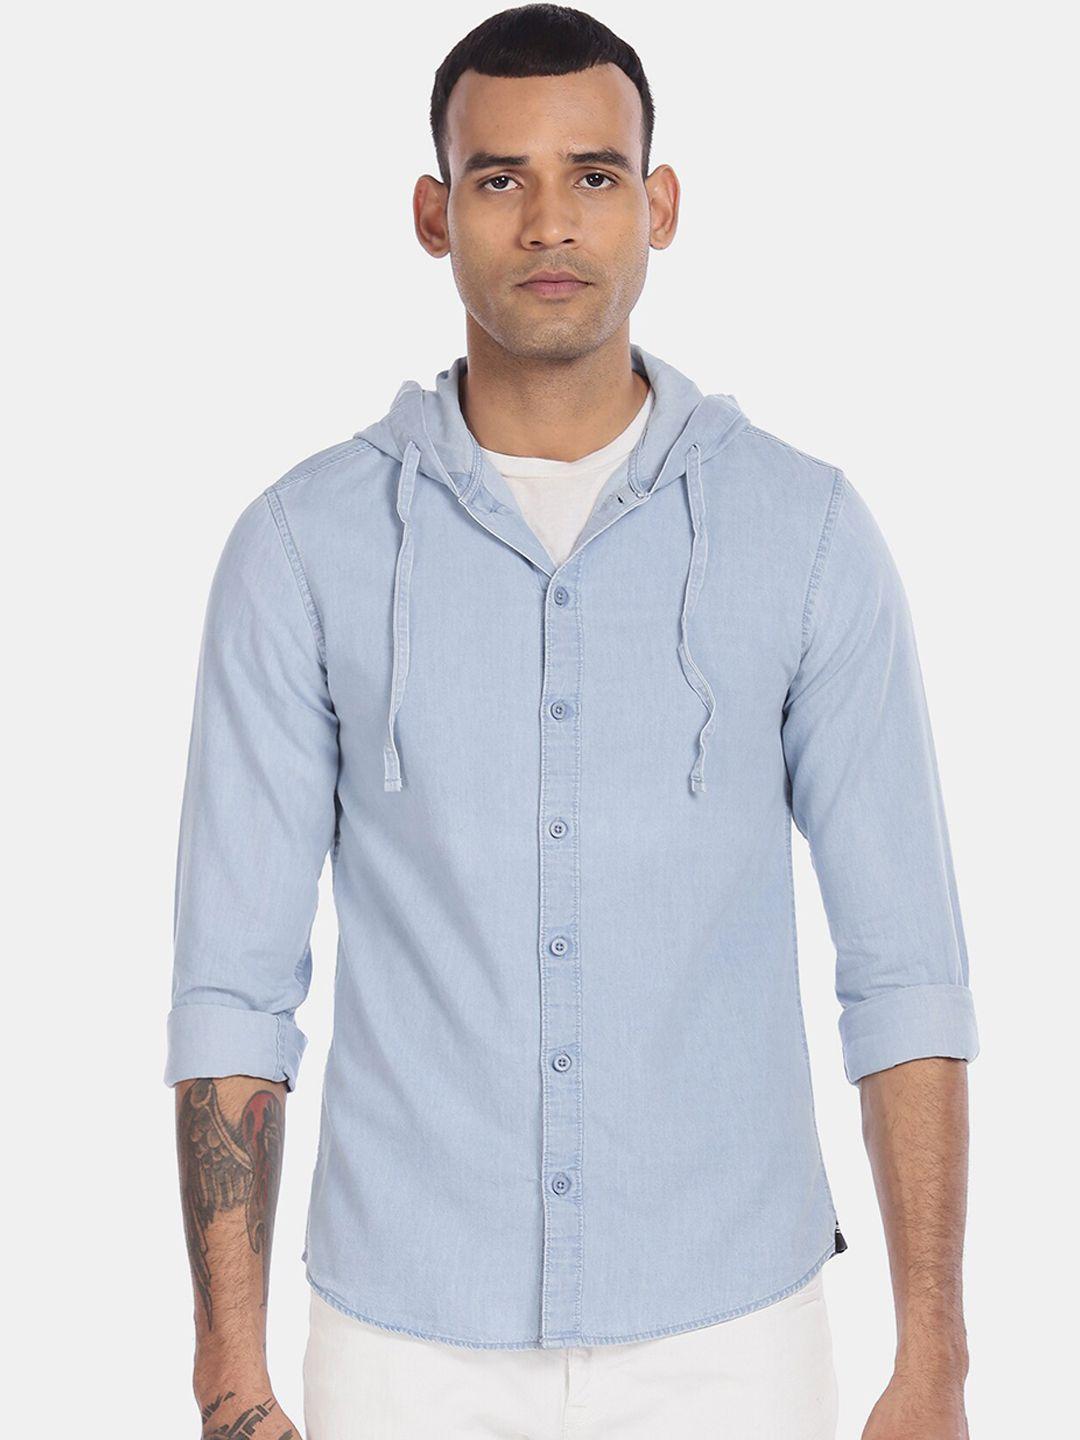 colt-men-blue-regular-fit-solid-hooded-chambray-shirt